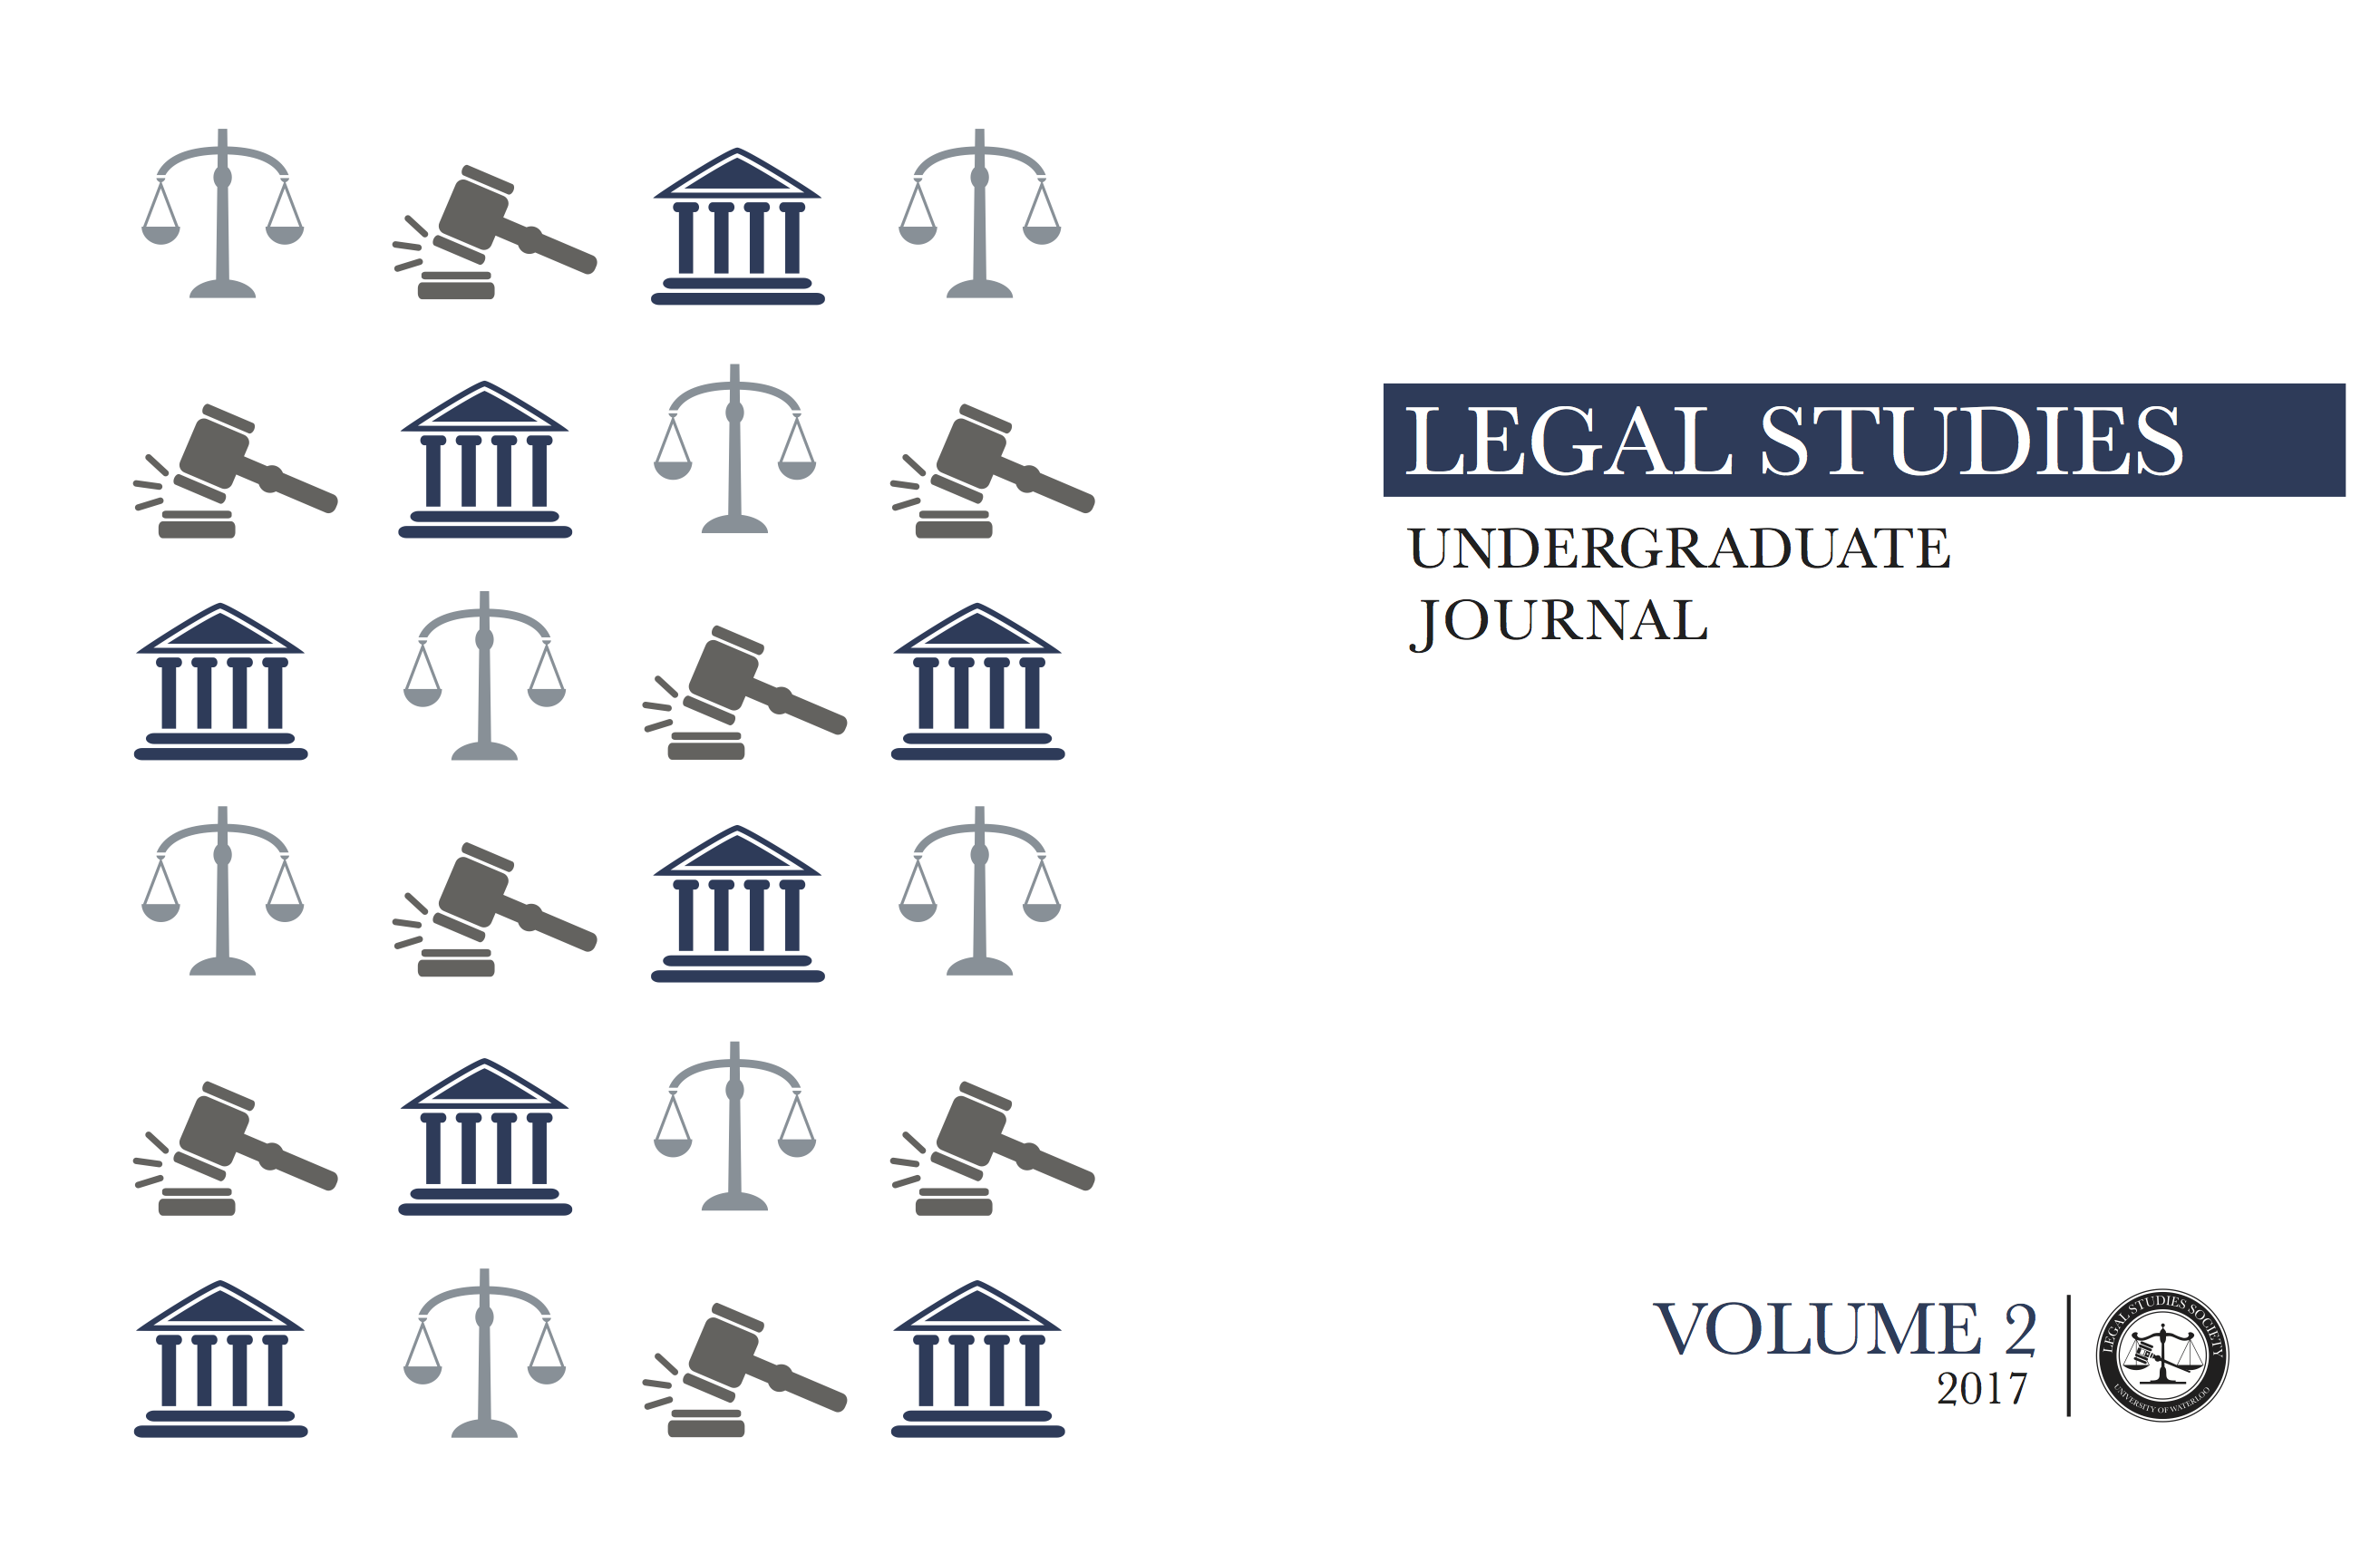 					View Vol. 2 (2017): Legal Studies Undergraduate Journal Volume 2
				